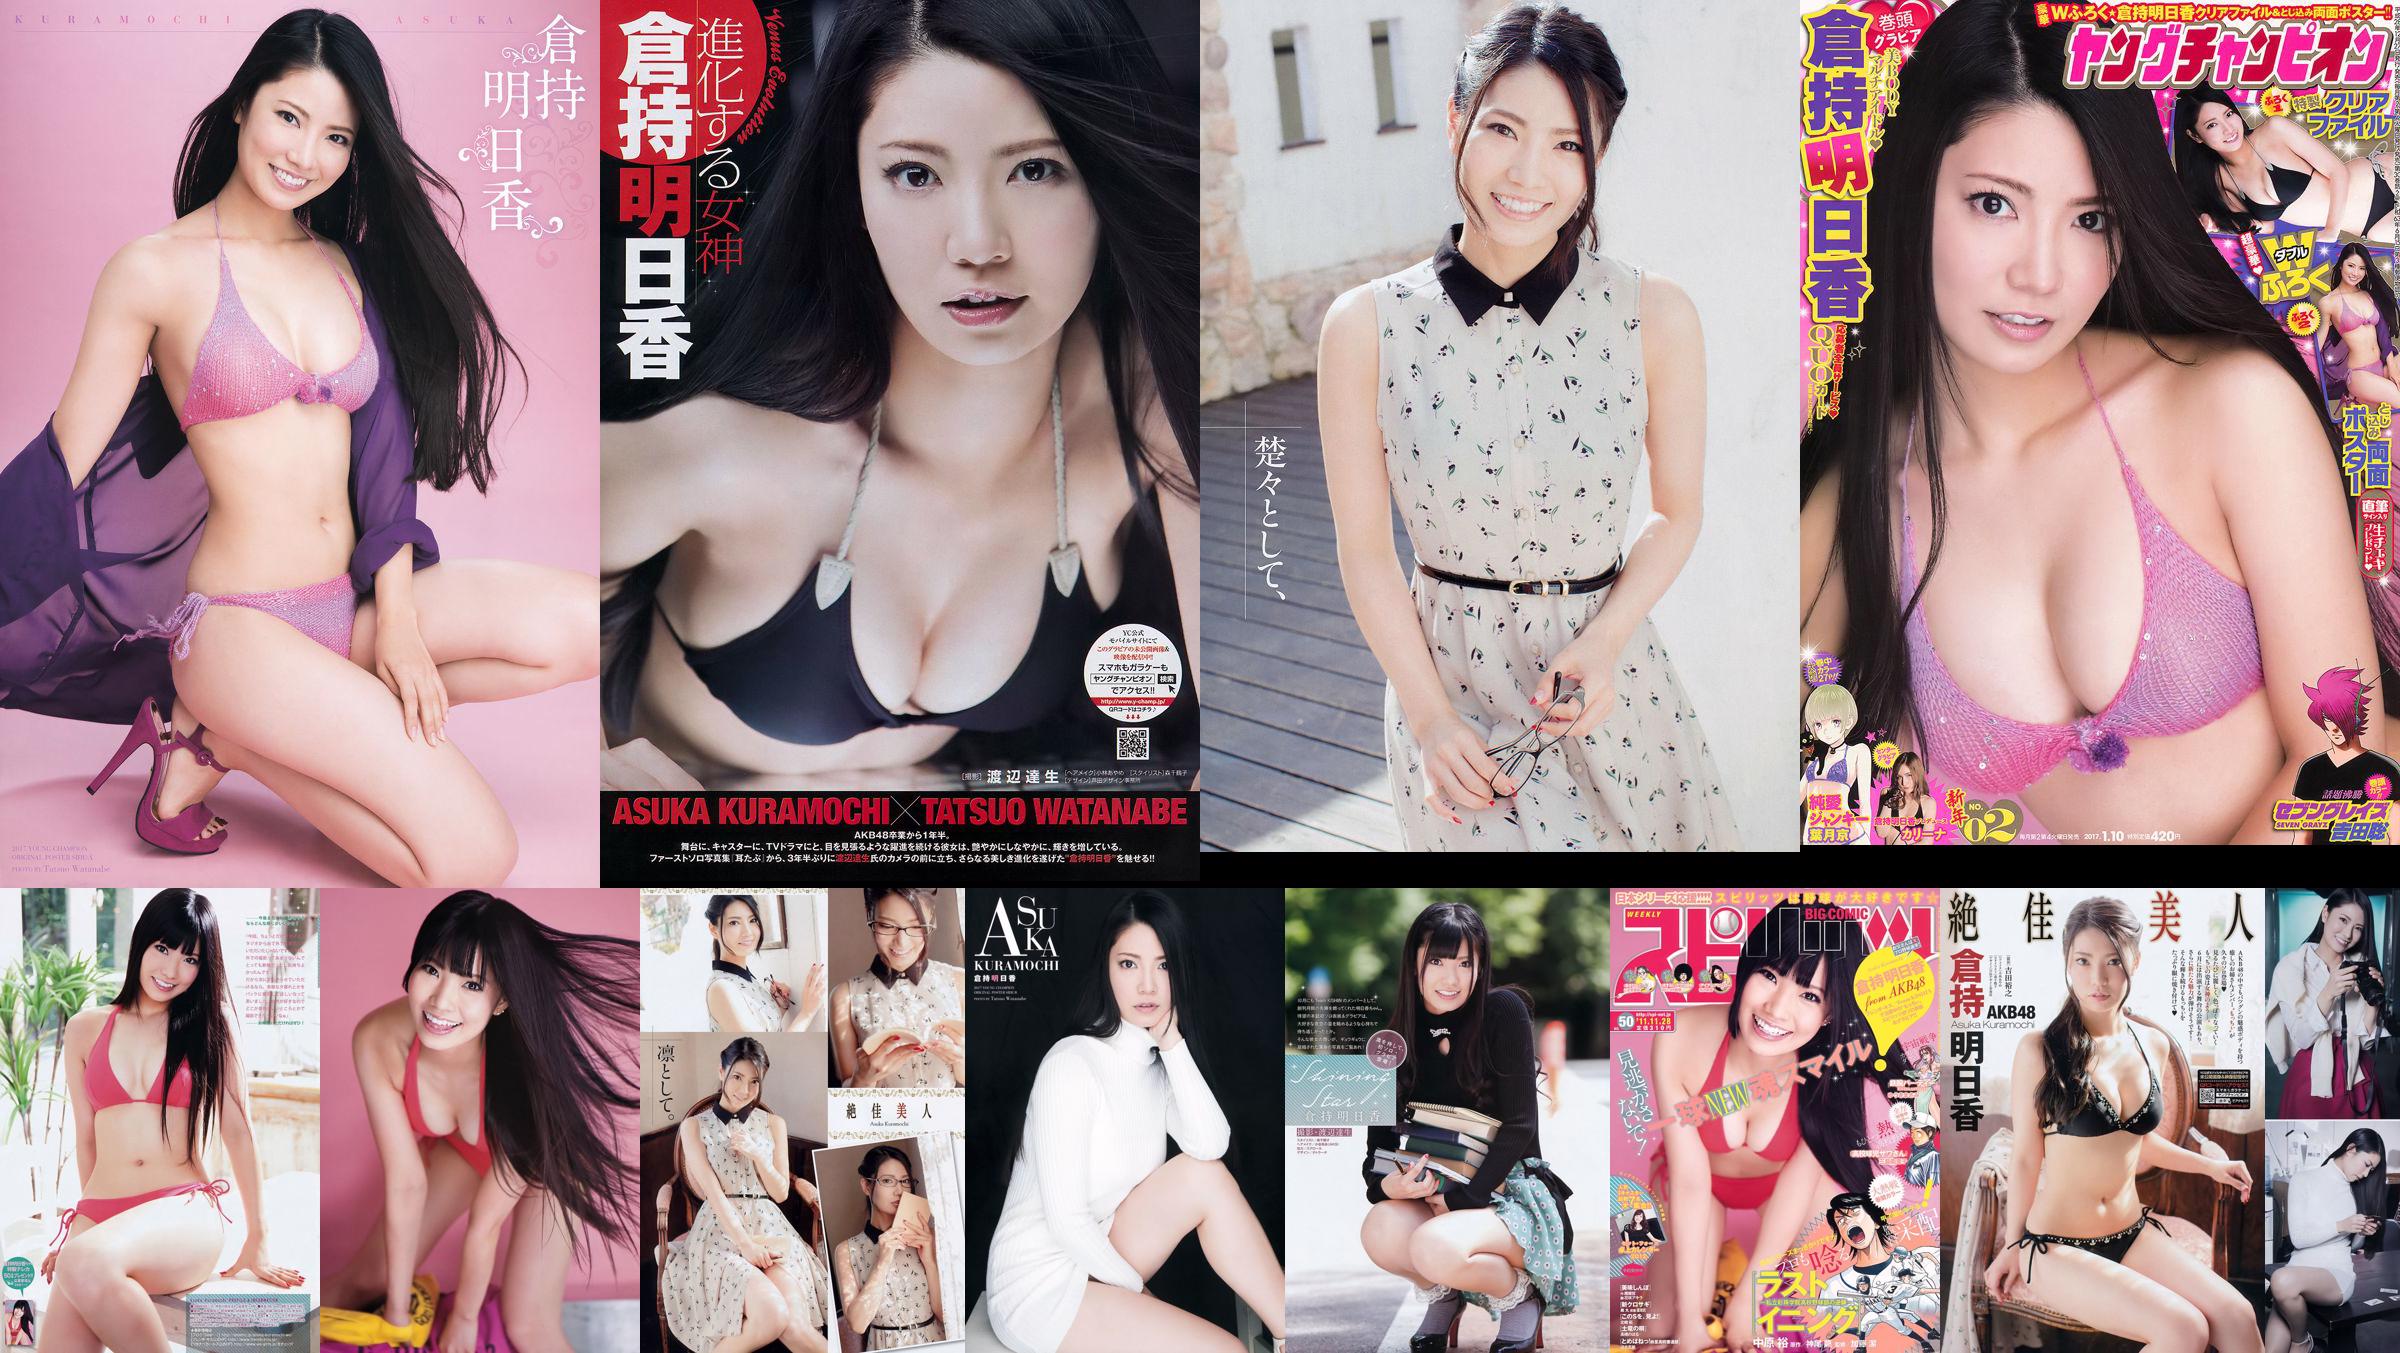 [Joven Campeona] Asuka Kuramochi 2015 No 09 Revista fotográfica No.3c41d4 Página 2